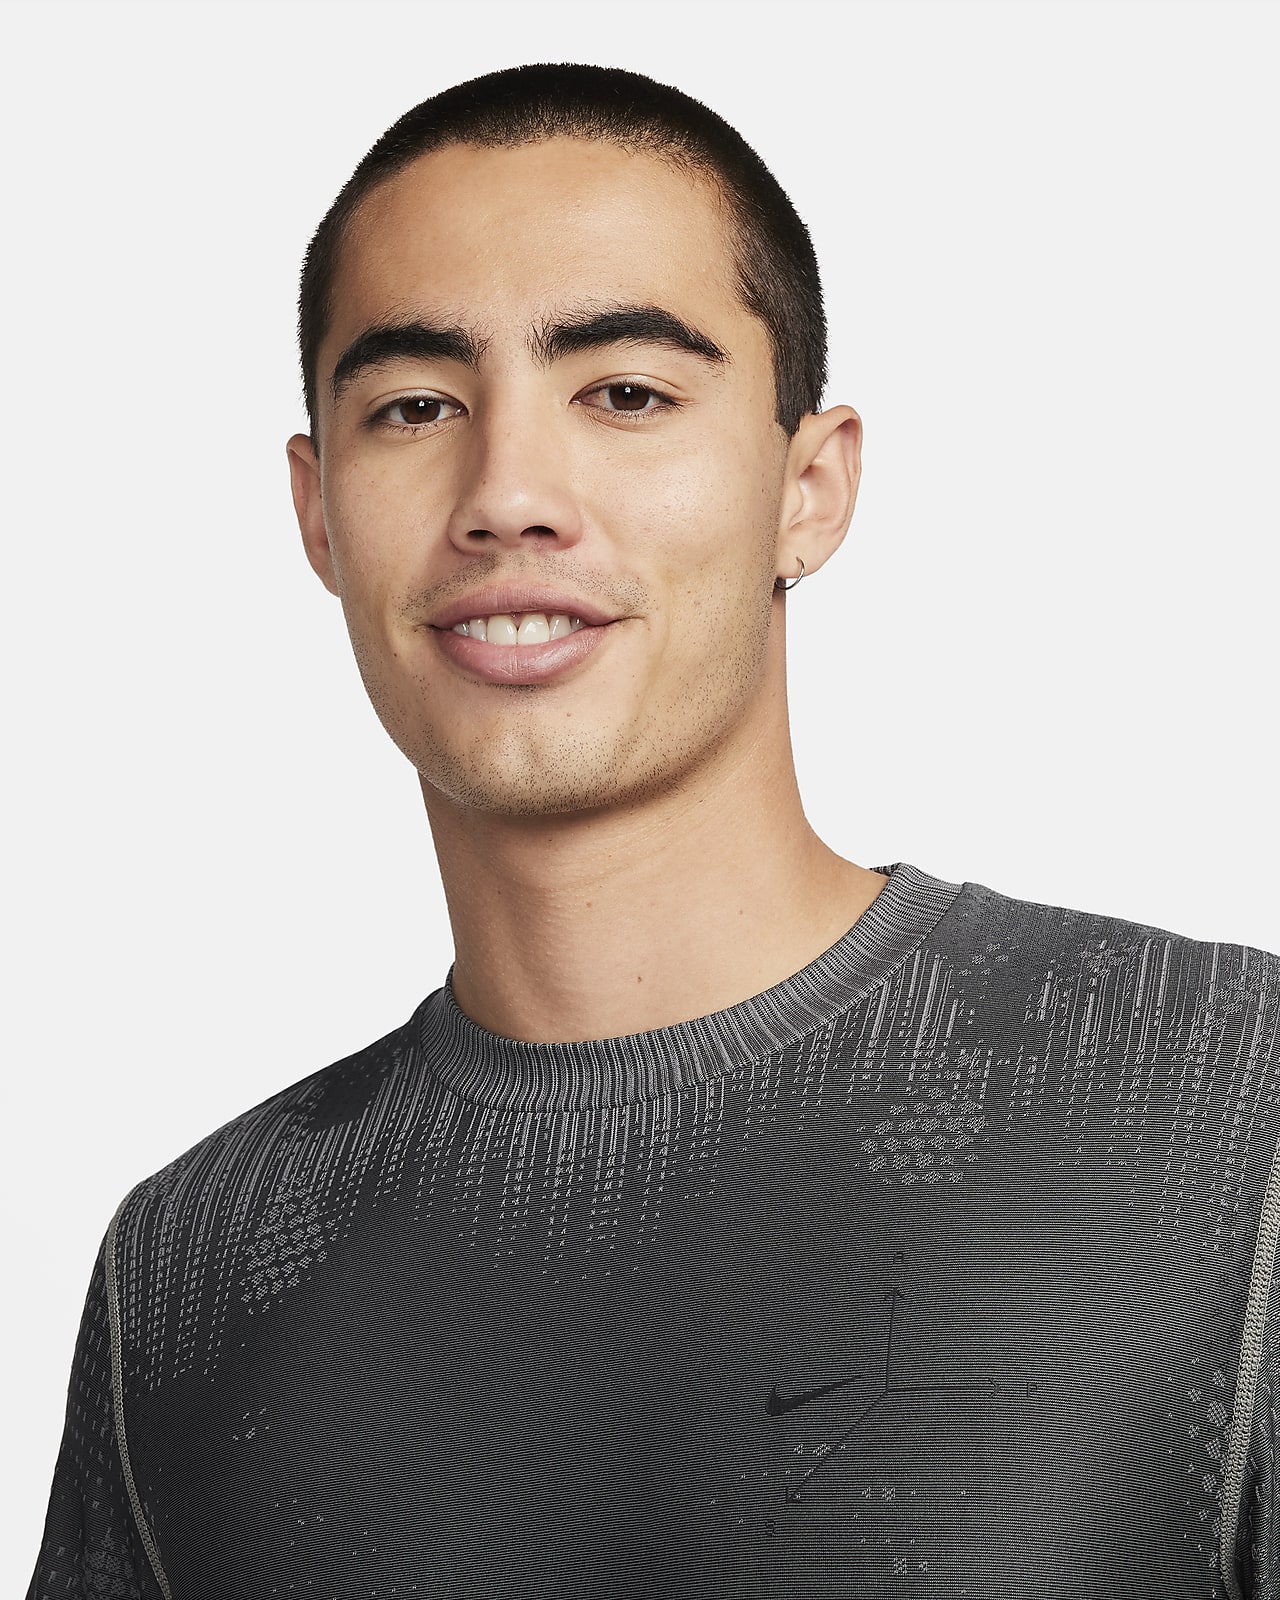 Nike APS Men's Dri-FIT ADV Short-Sleeve Versatile Top